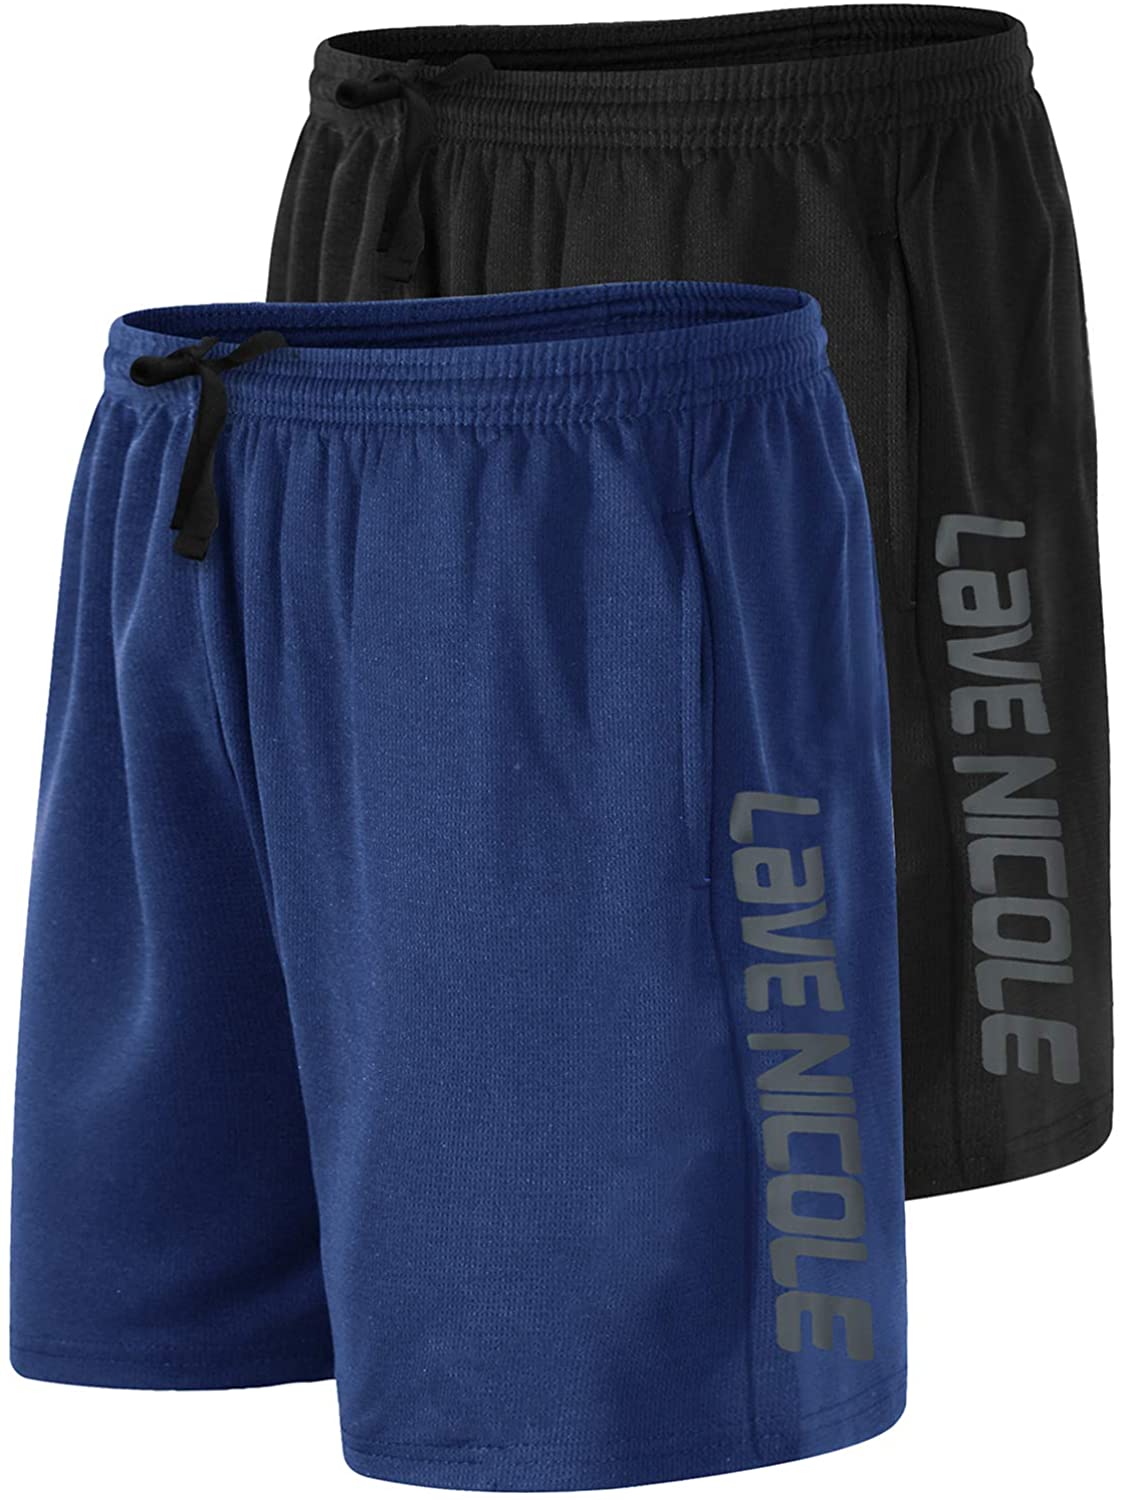 Suyye Mens 7 Workout Running Shorts Athletic Shorts with Pockets 